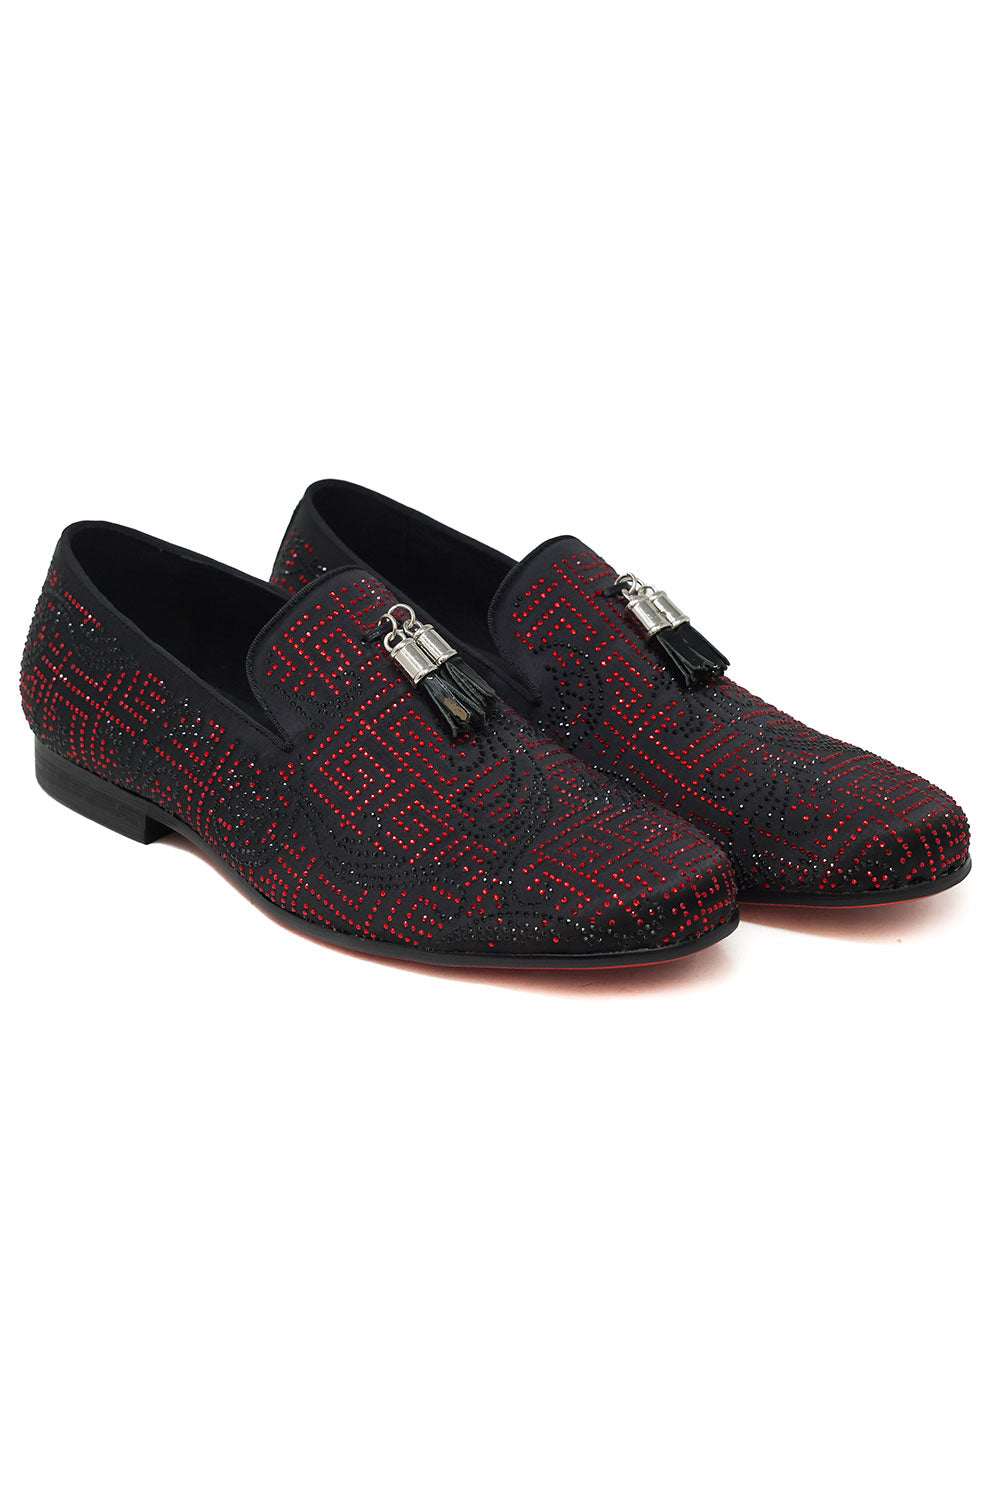 Barabas Men's Greek Key Pattern Tassel Slip On Loafer Shoes 2SH3102ST Black Red